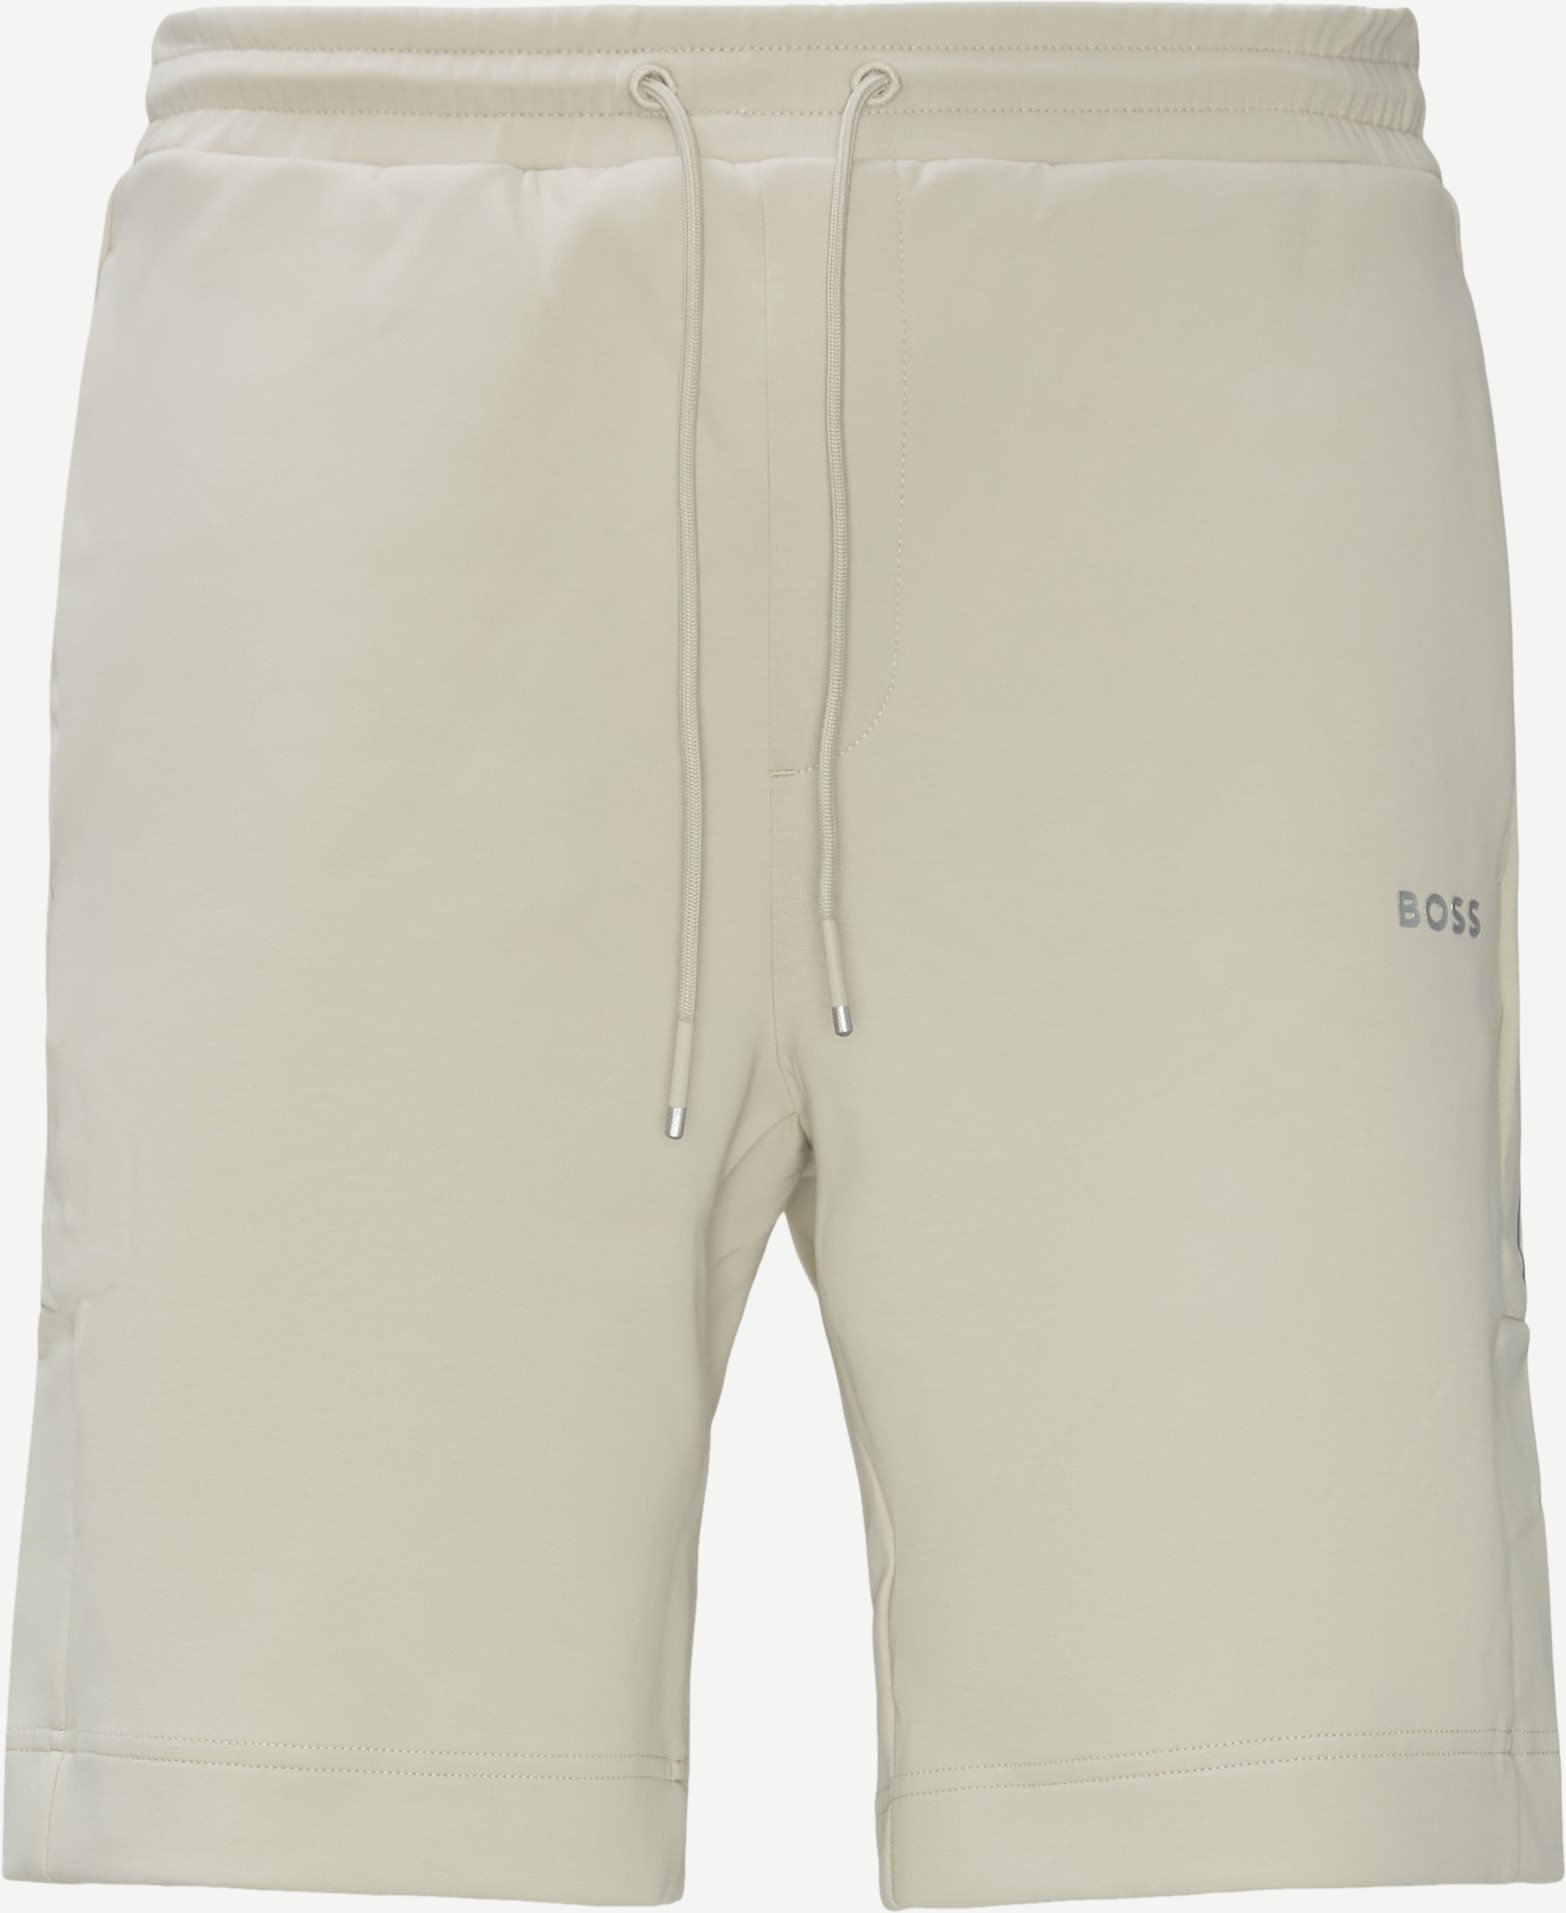 Headlo 1 Sweatshorts - Shorts - Regular fit - Sand